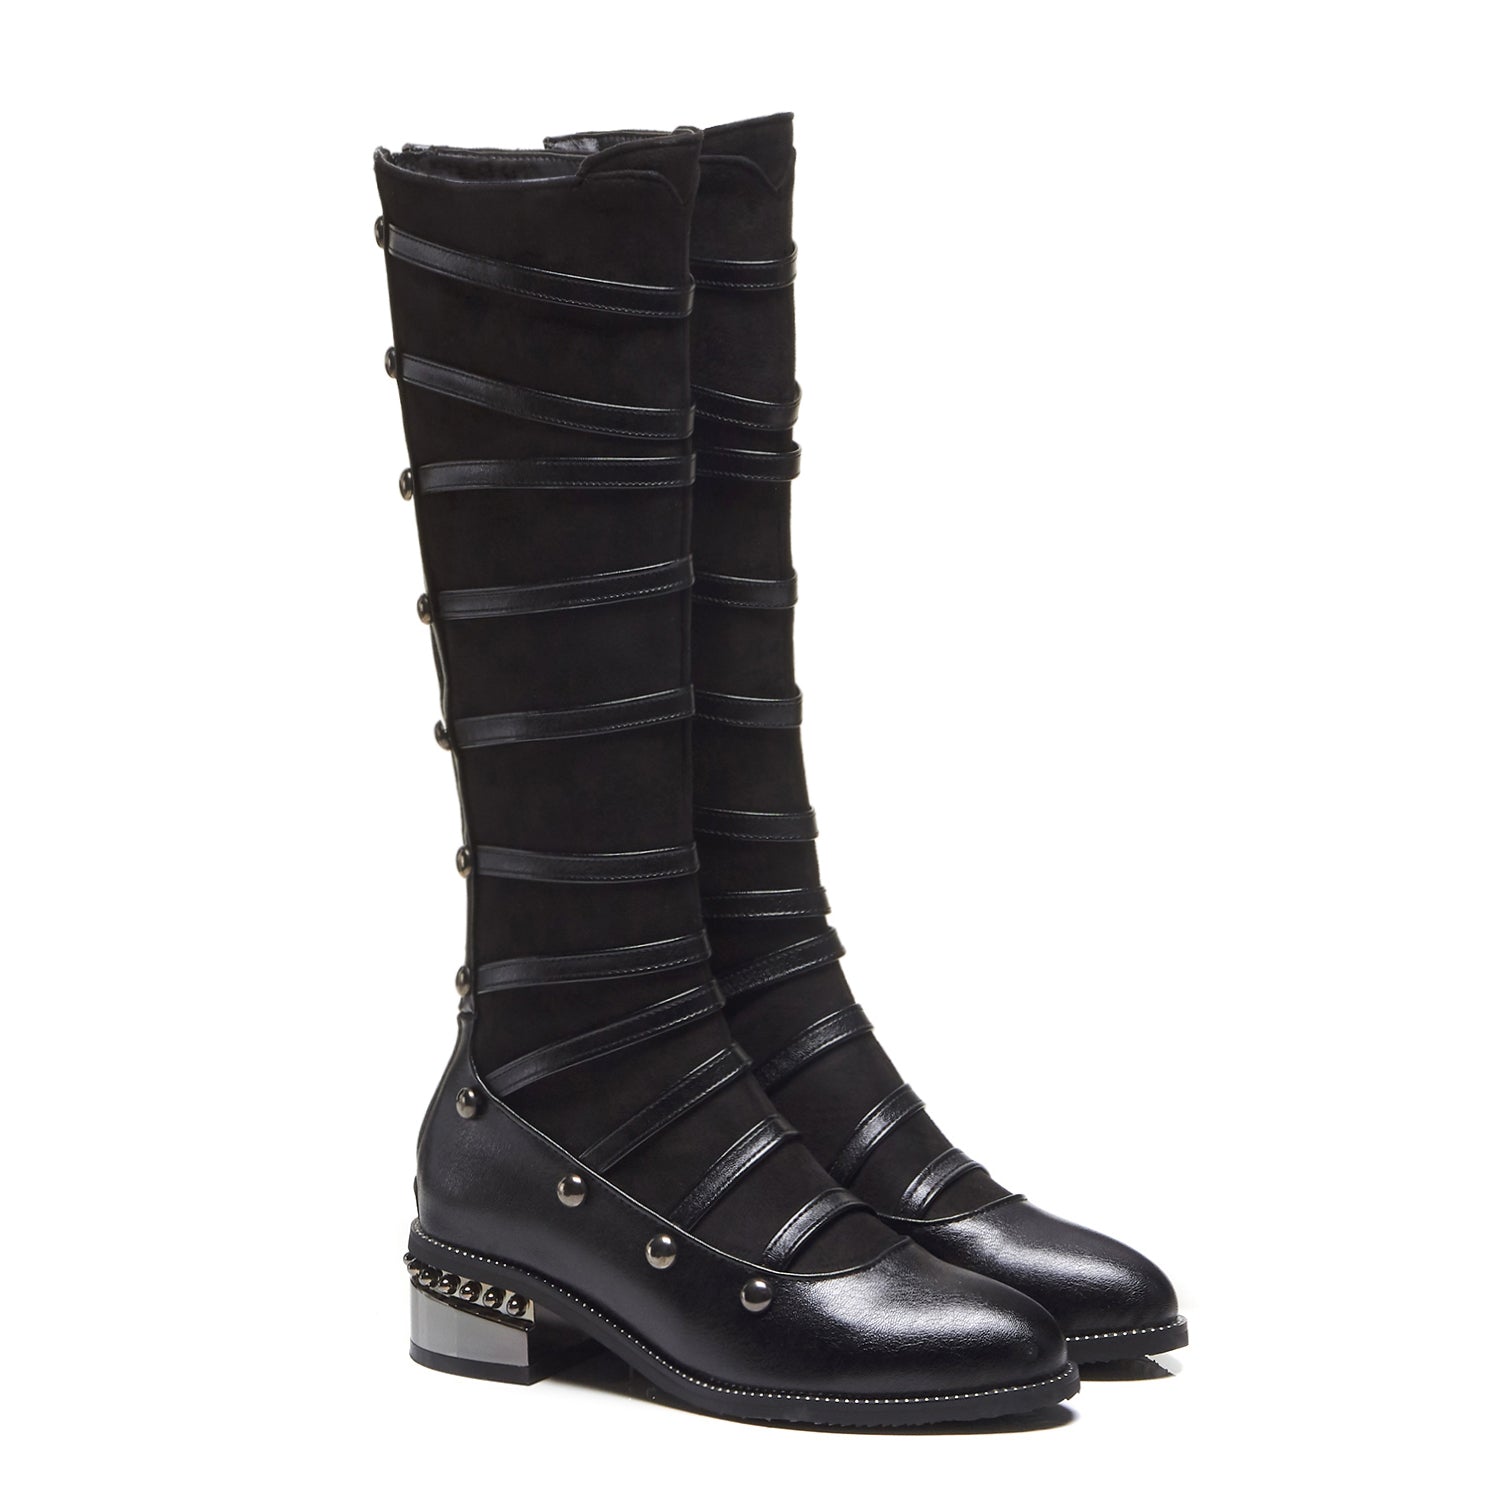 Bigsizeheels Punk strap rap knee boots - Black freeshipping - bigsizeheel®-size5-size15 -All Plus Sizes Available!